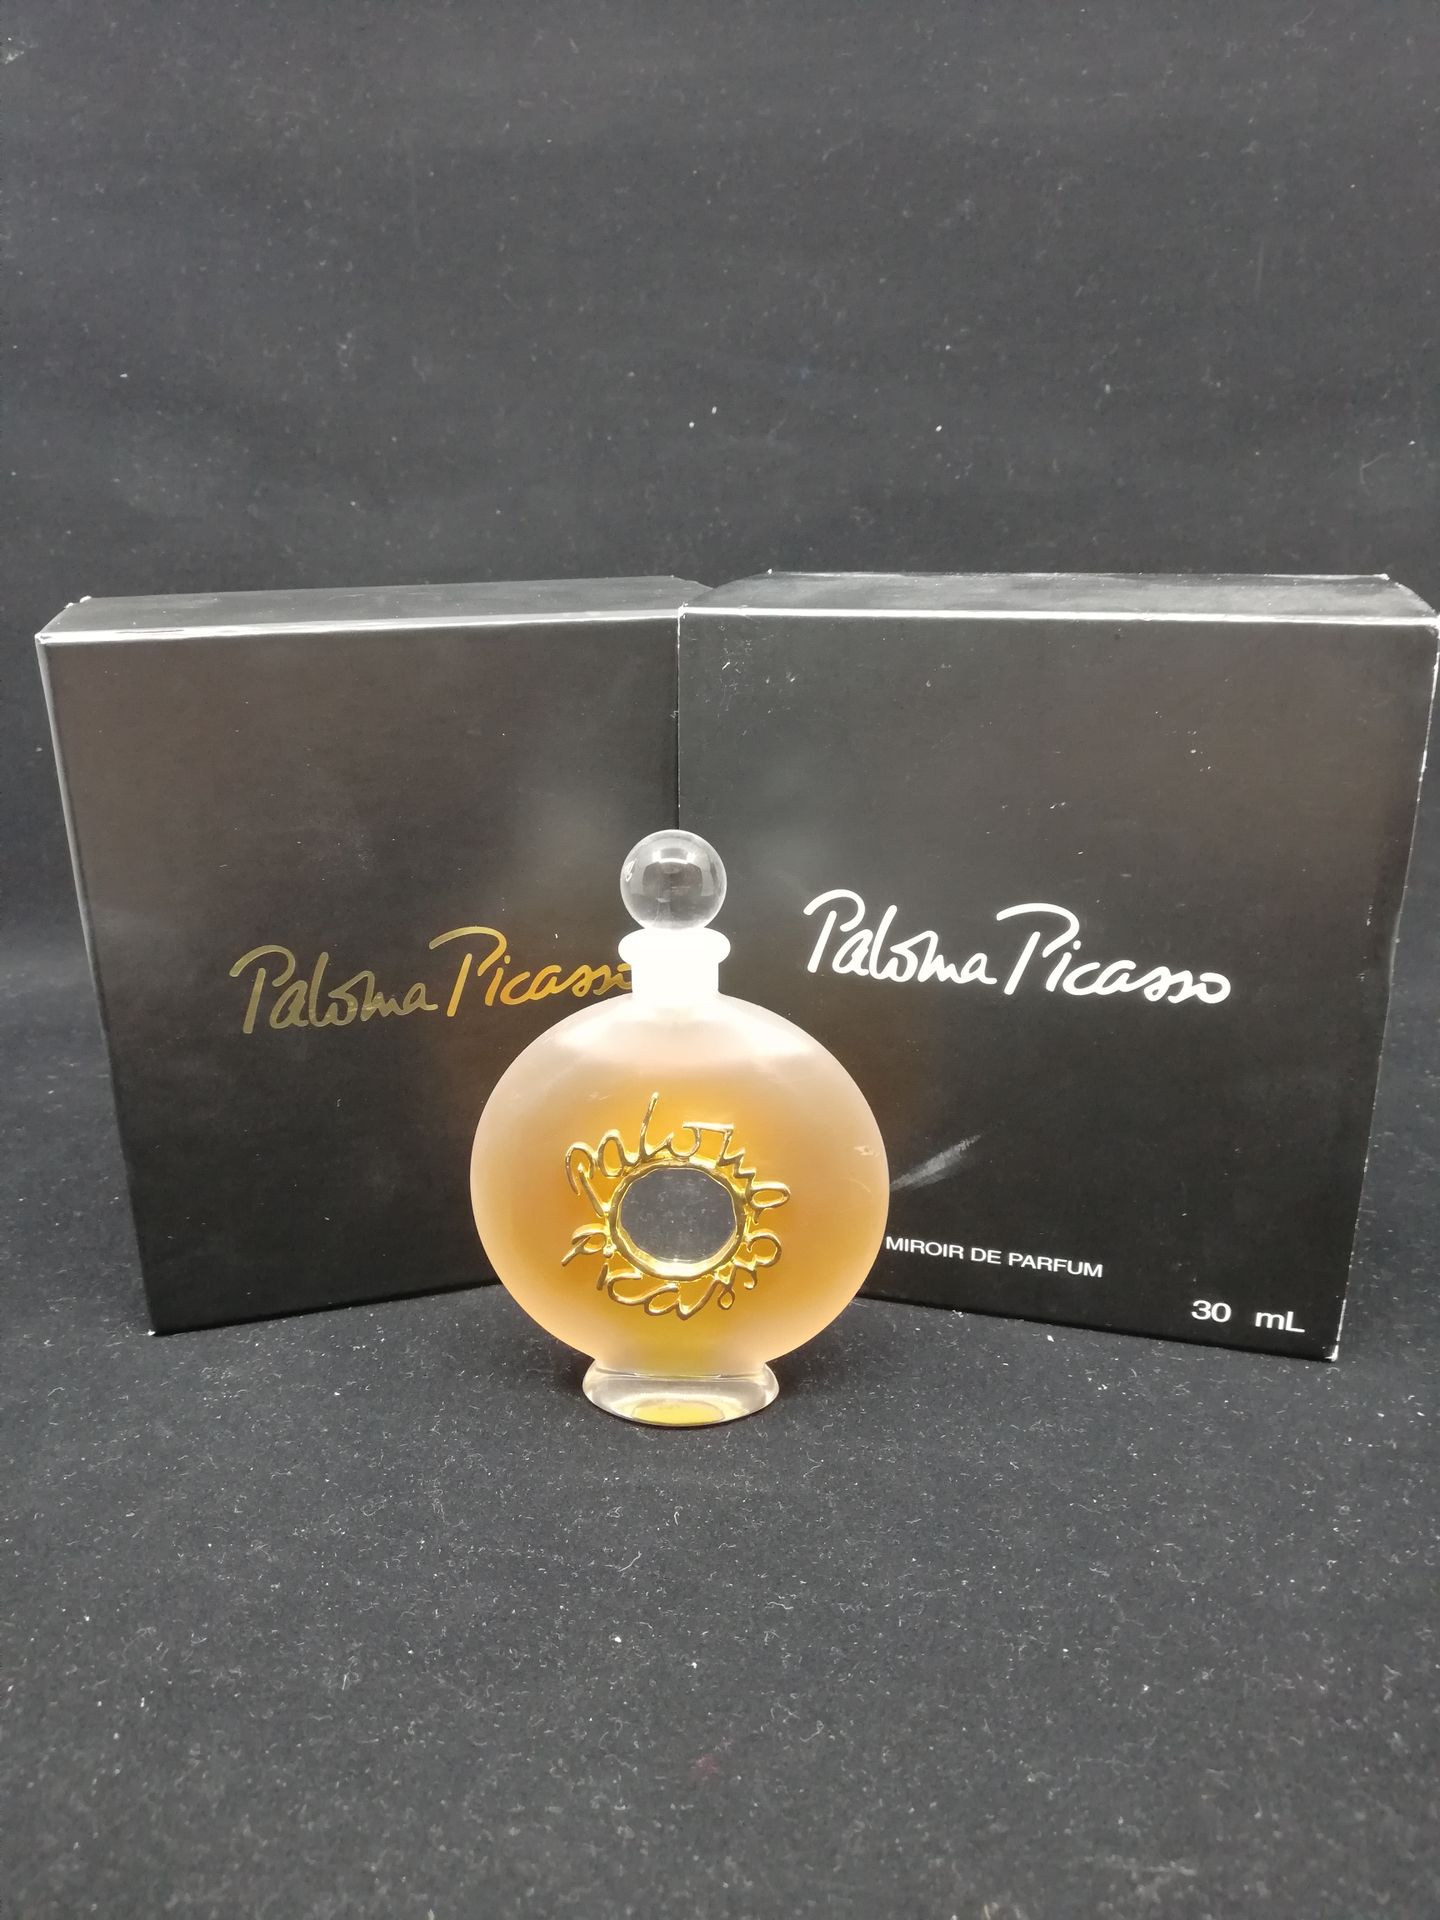 Null Paloma Picasso - (1990's)

Bottle edition "Miroir de Parfum" numbered 1238/&hellip;